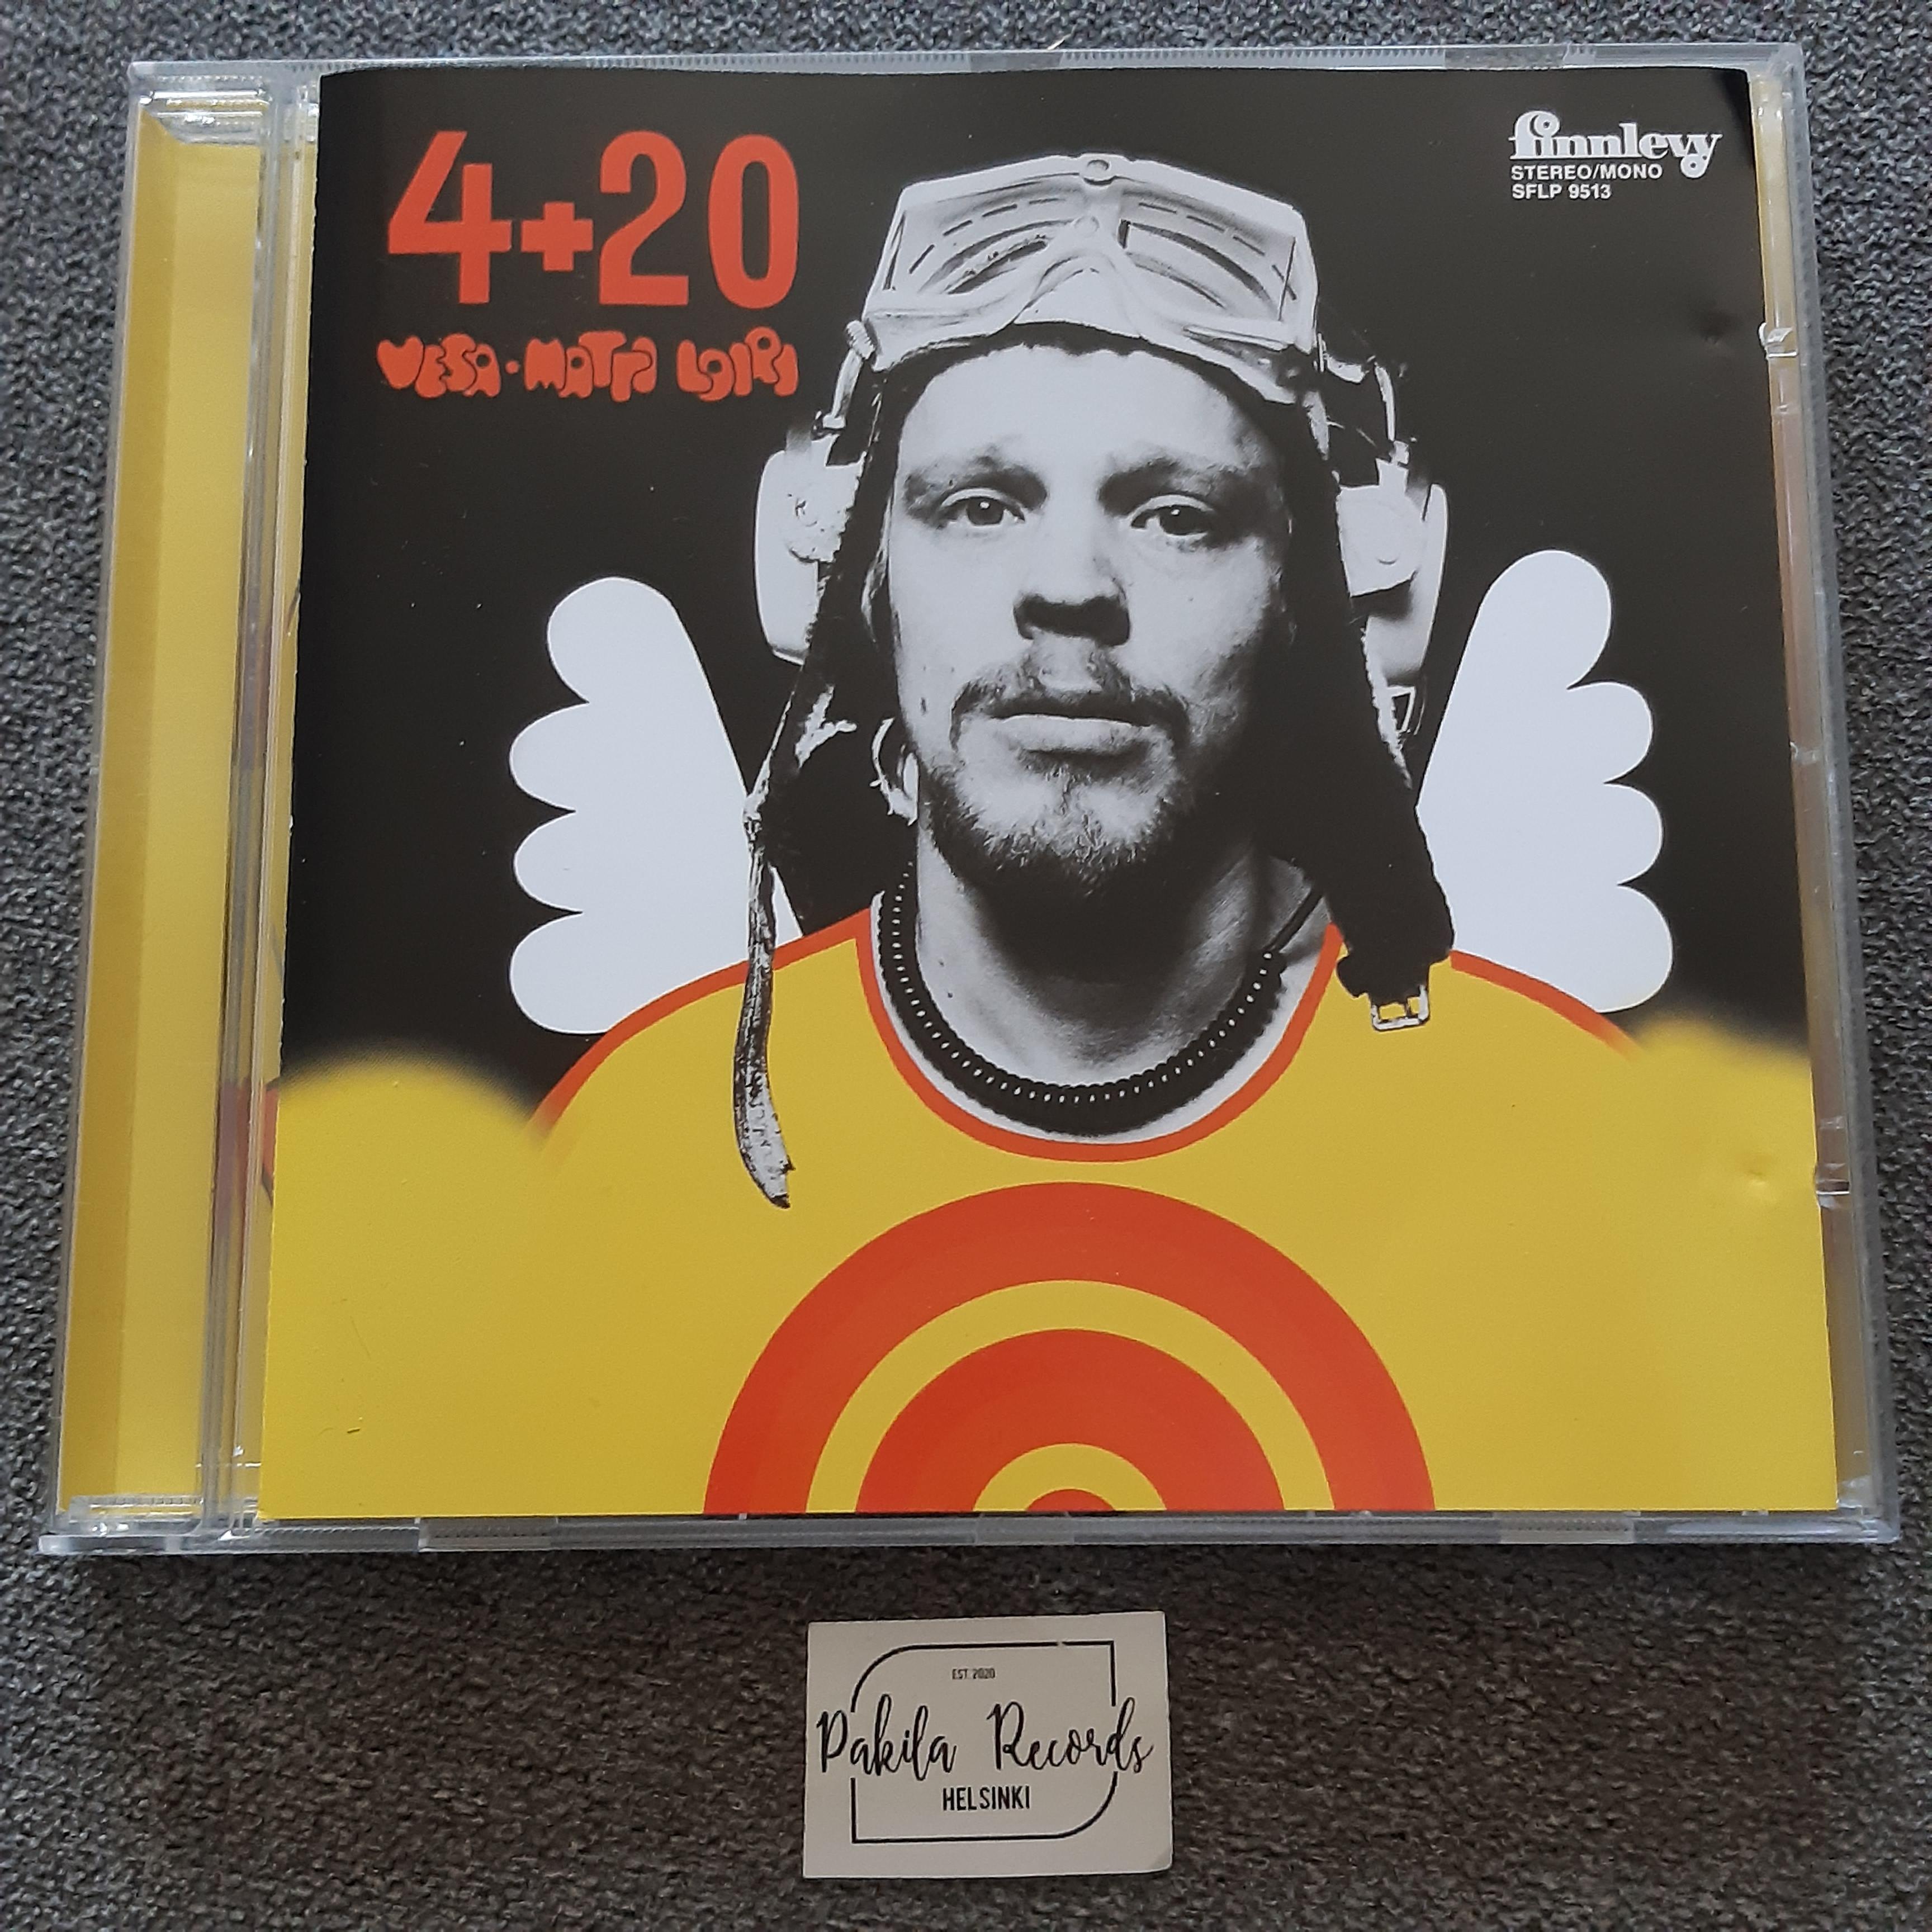 Vesa-Matti Loiri - 4+20 - CD (käytetty)